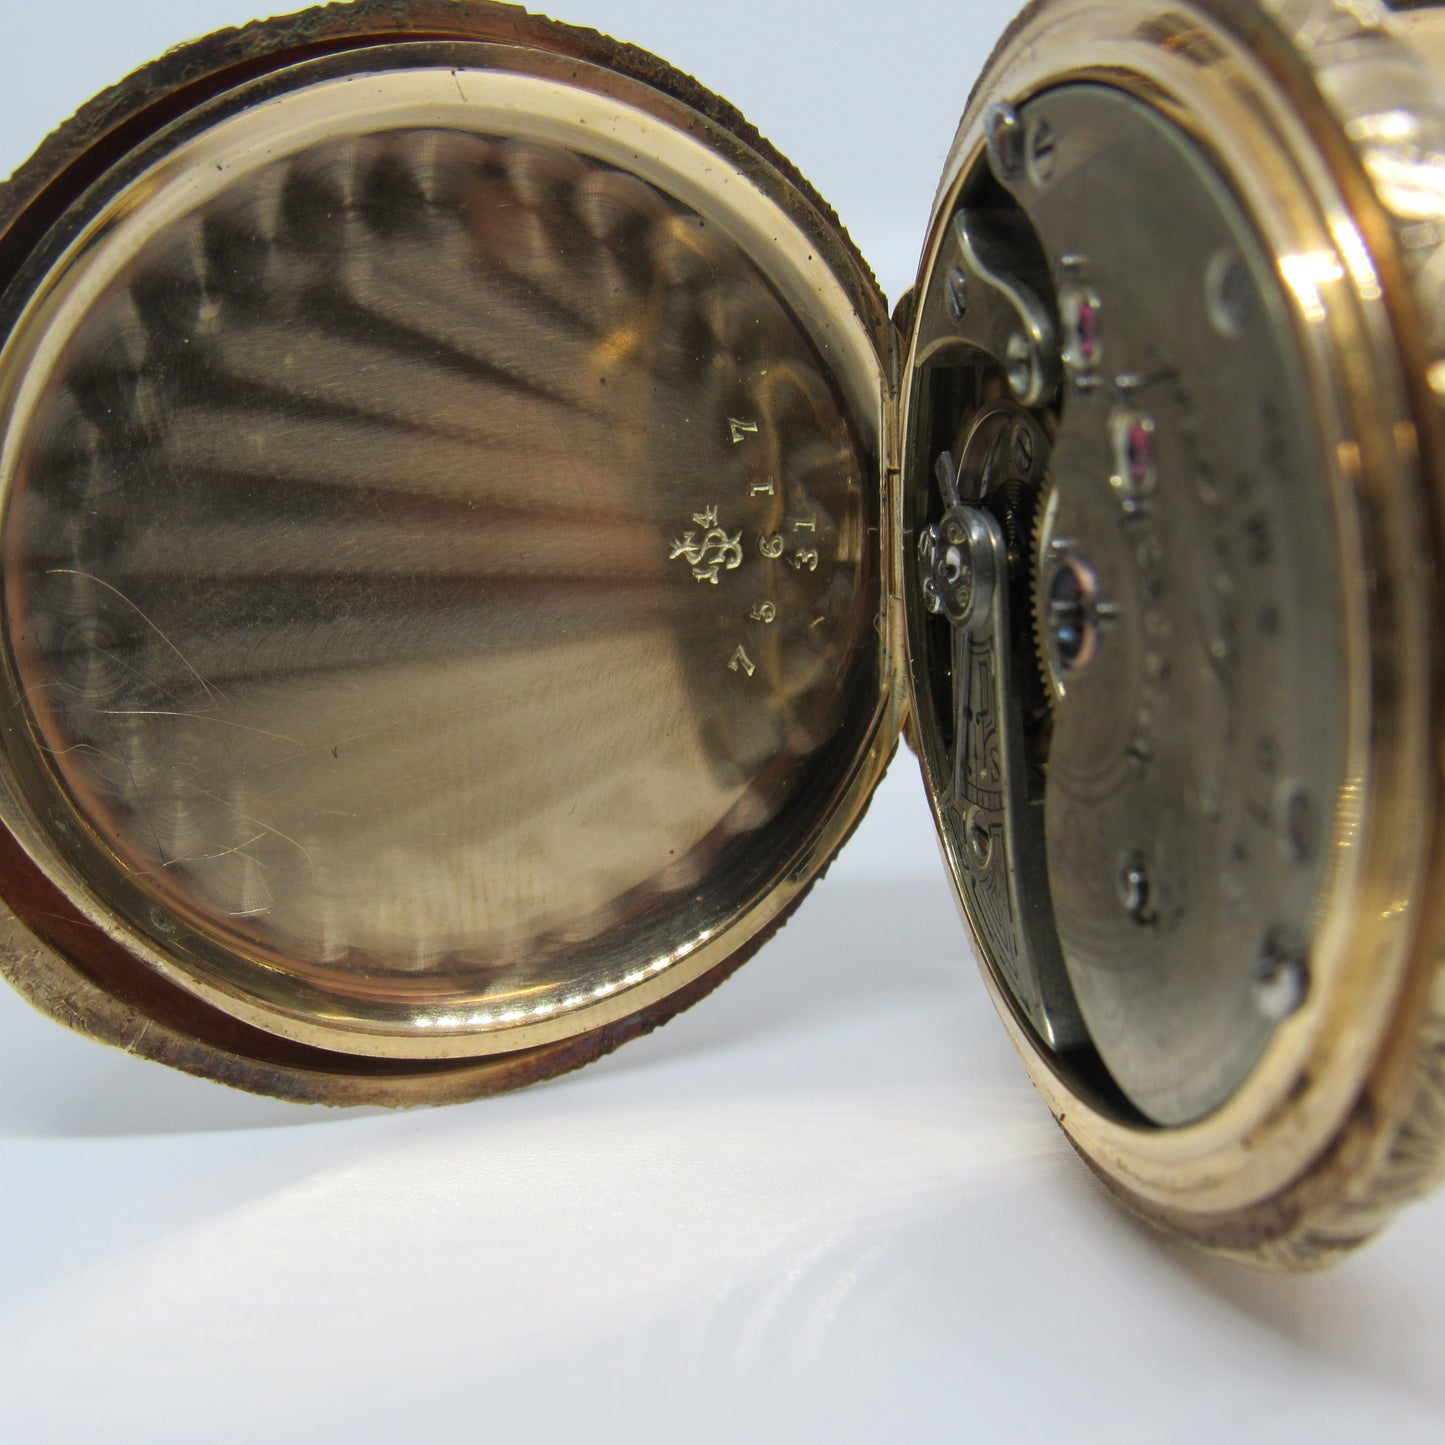 Vintage Mermod Jaccard & Co 14k Tricolor Gold Pocket Watch - Working!